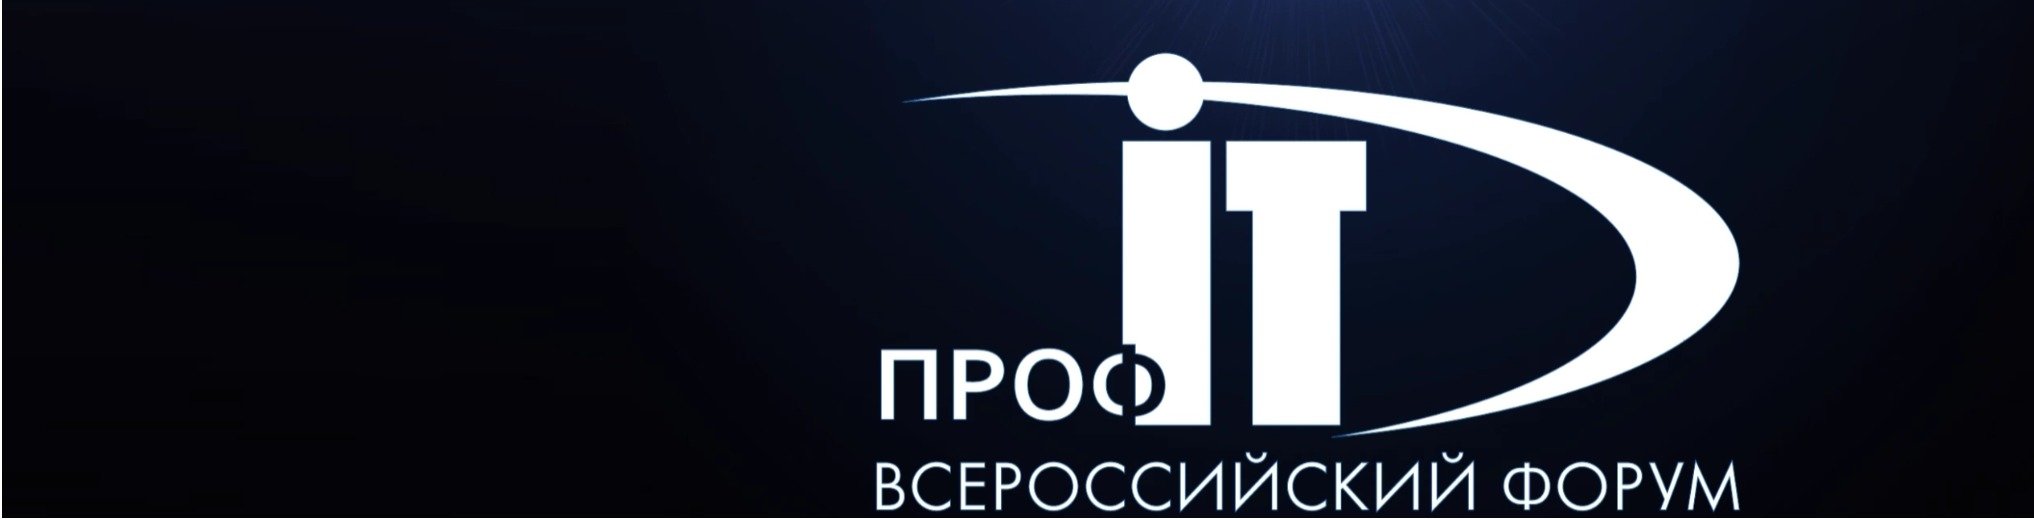 IX Всероссийский форум «ПРОФ-IT» (Н. Новгород)